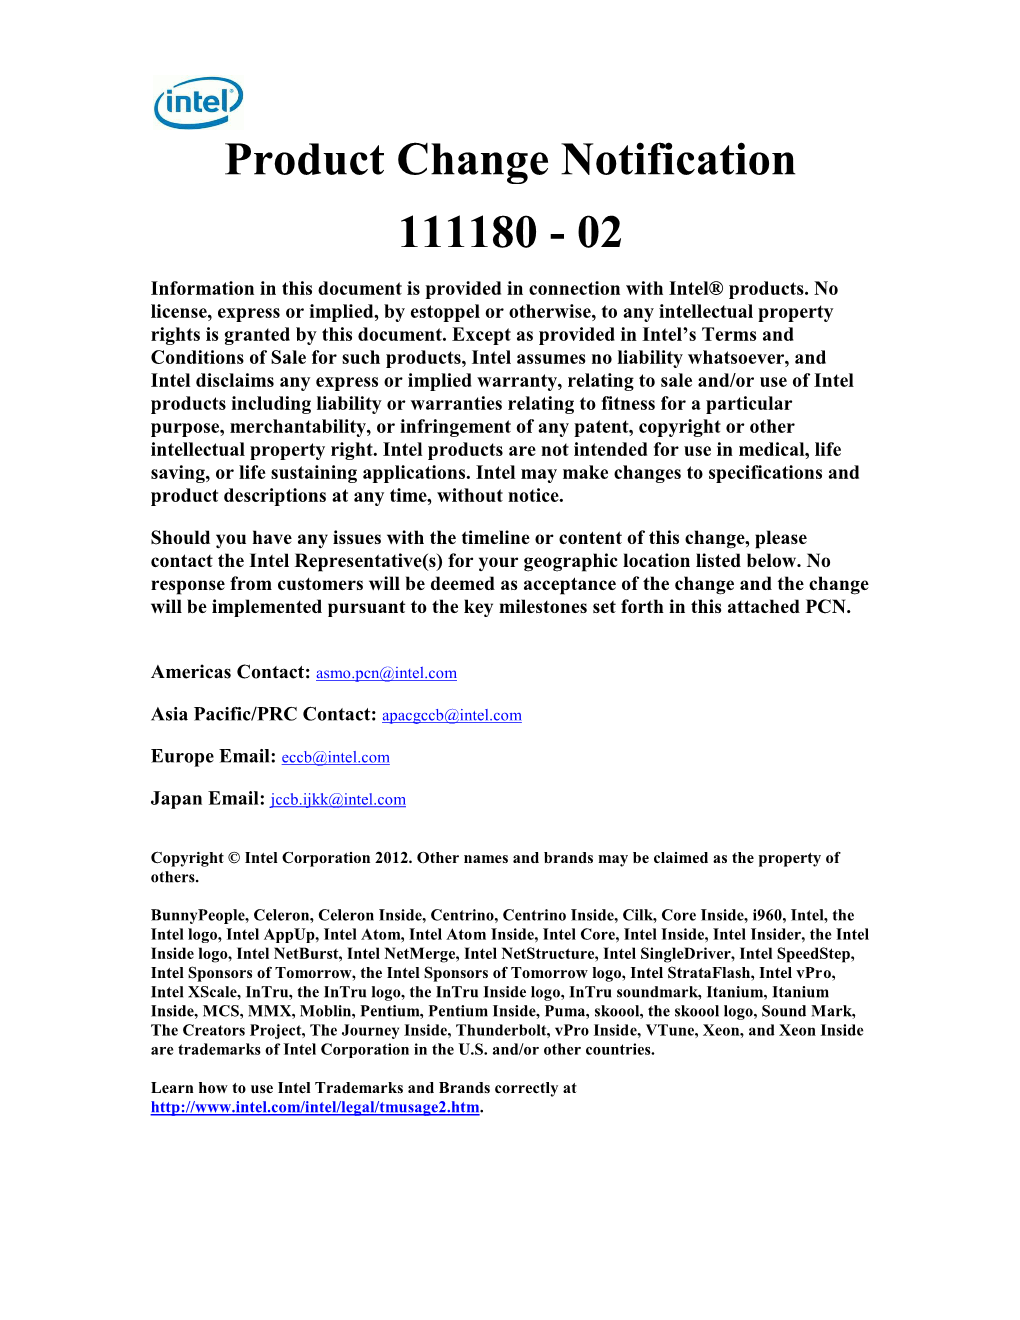 Product Change Notification 111180